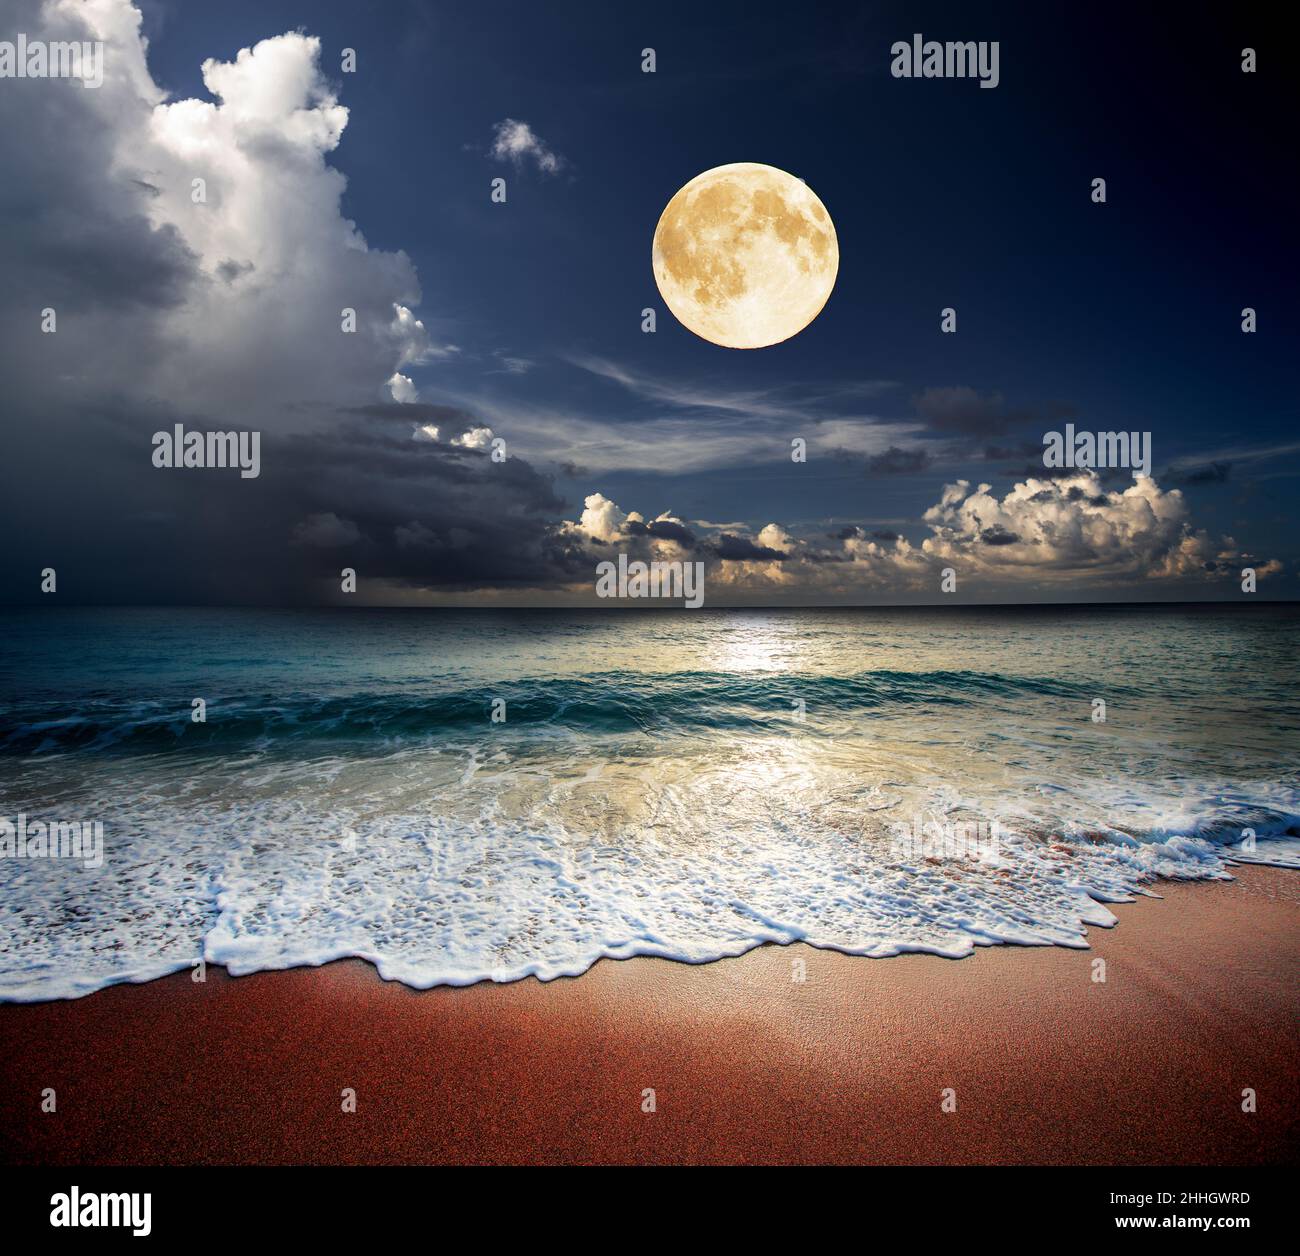 Sandy beach and moon at night Stock Photo